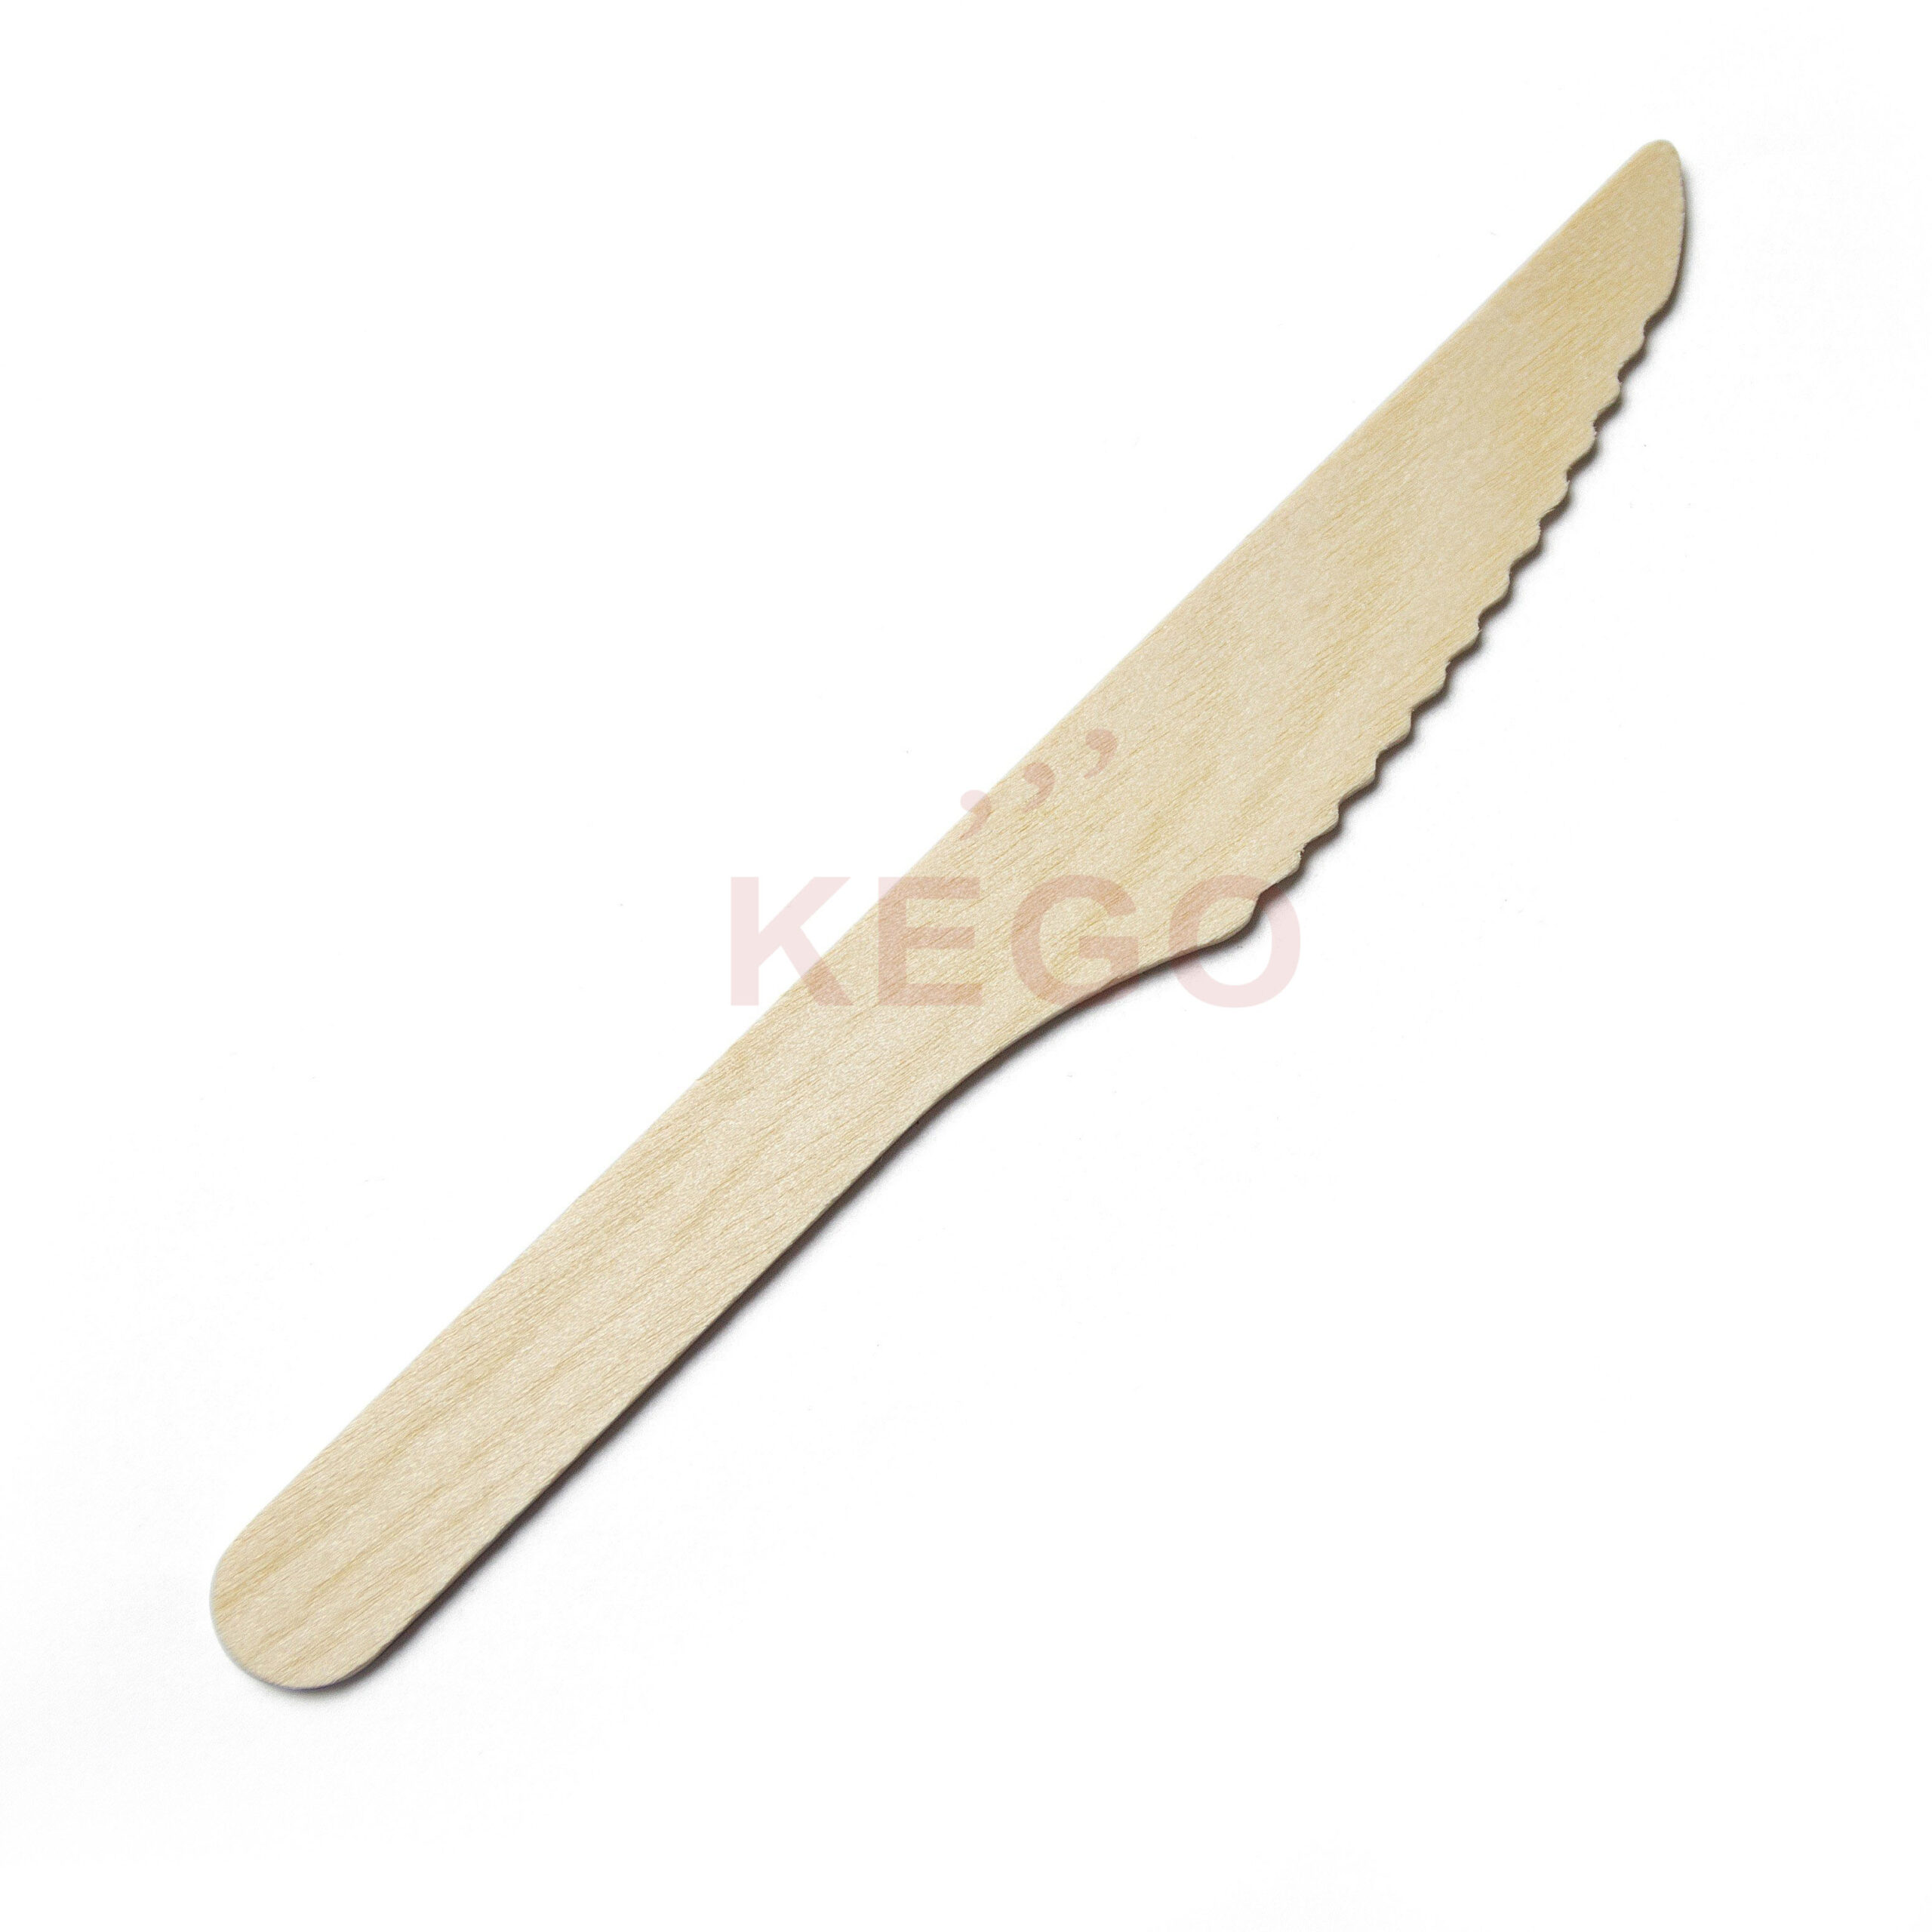 https://kego.vn/wp-content/uploads/2015/09/Disposable-Wooden-Knife-165-2-1-scaled.jpg